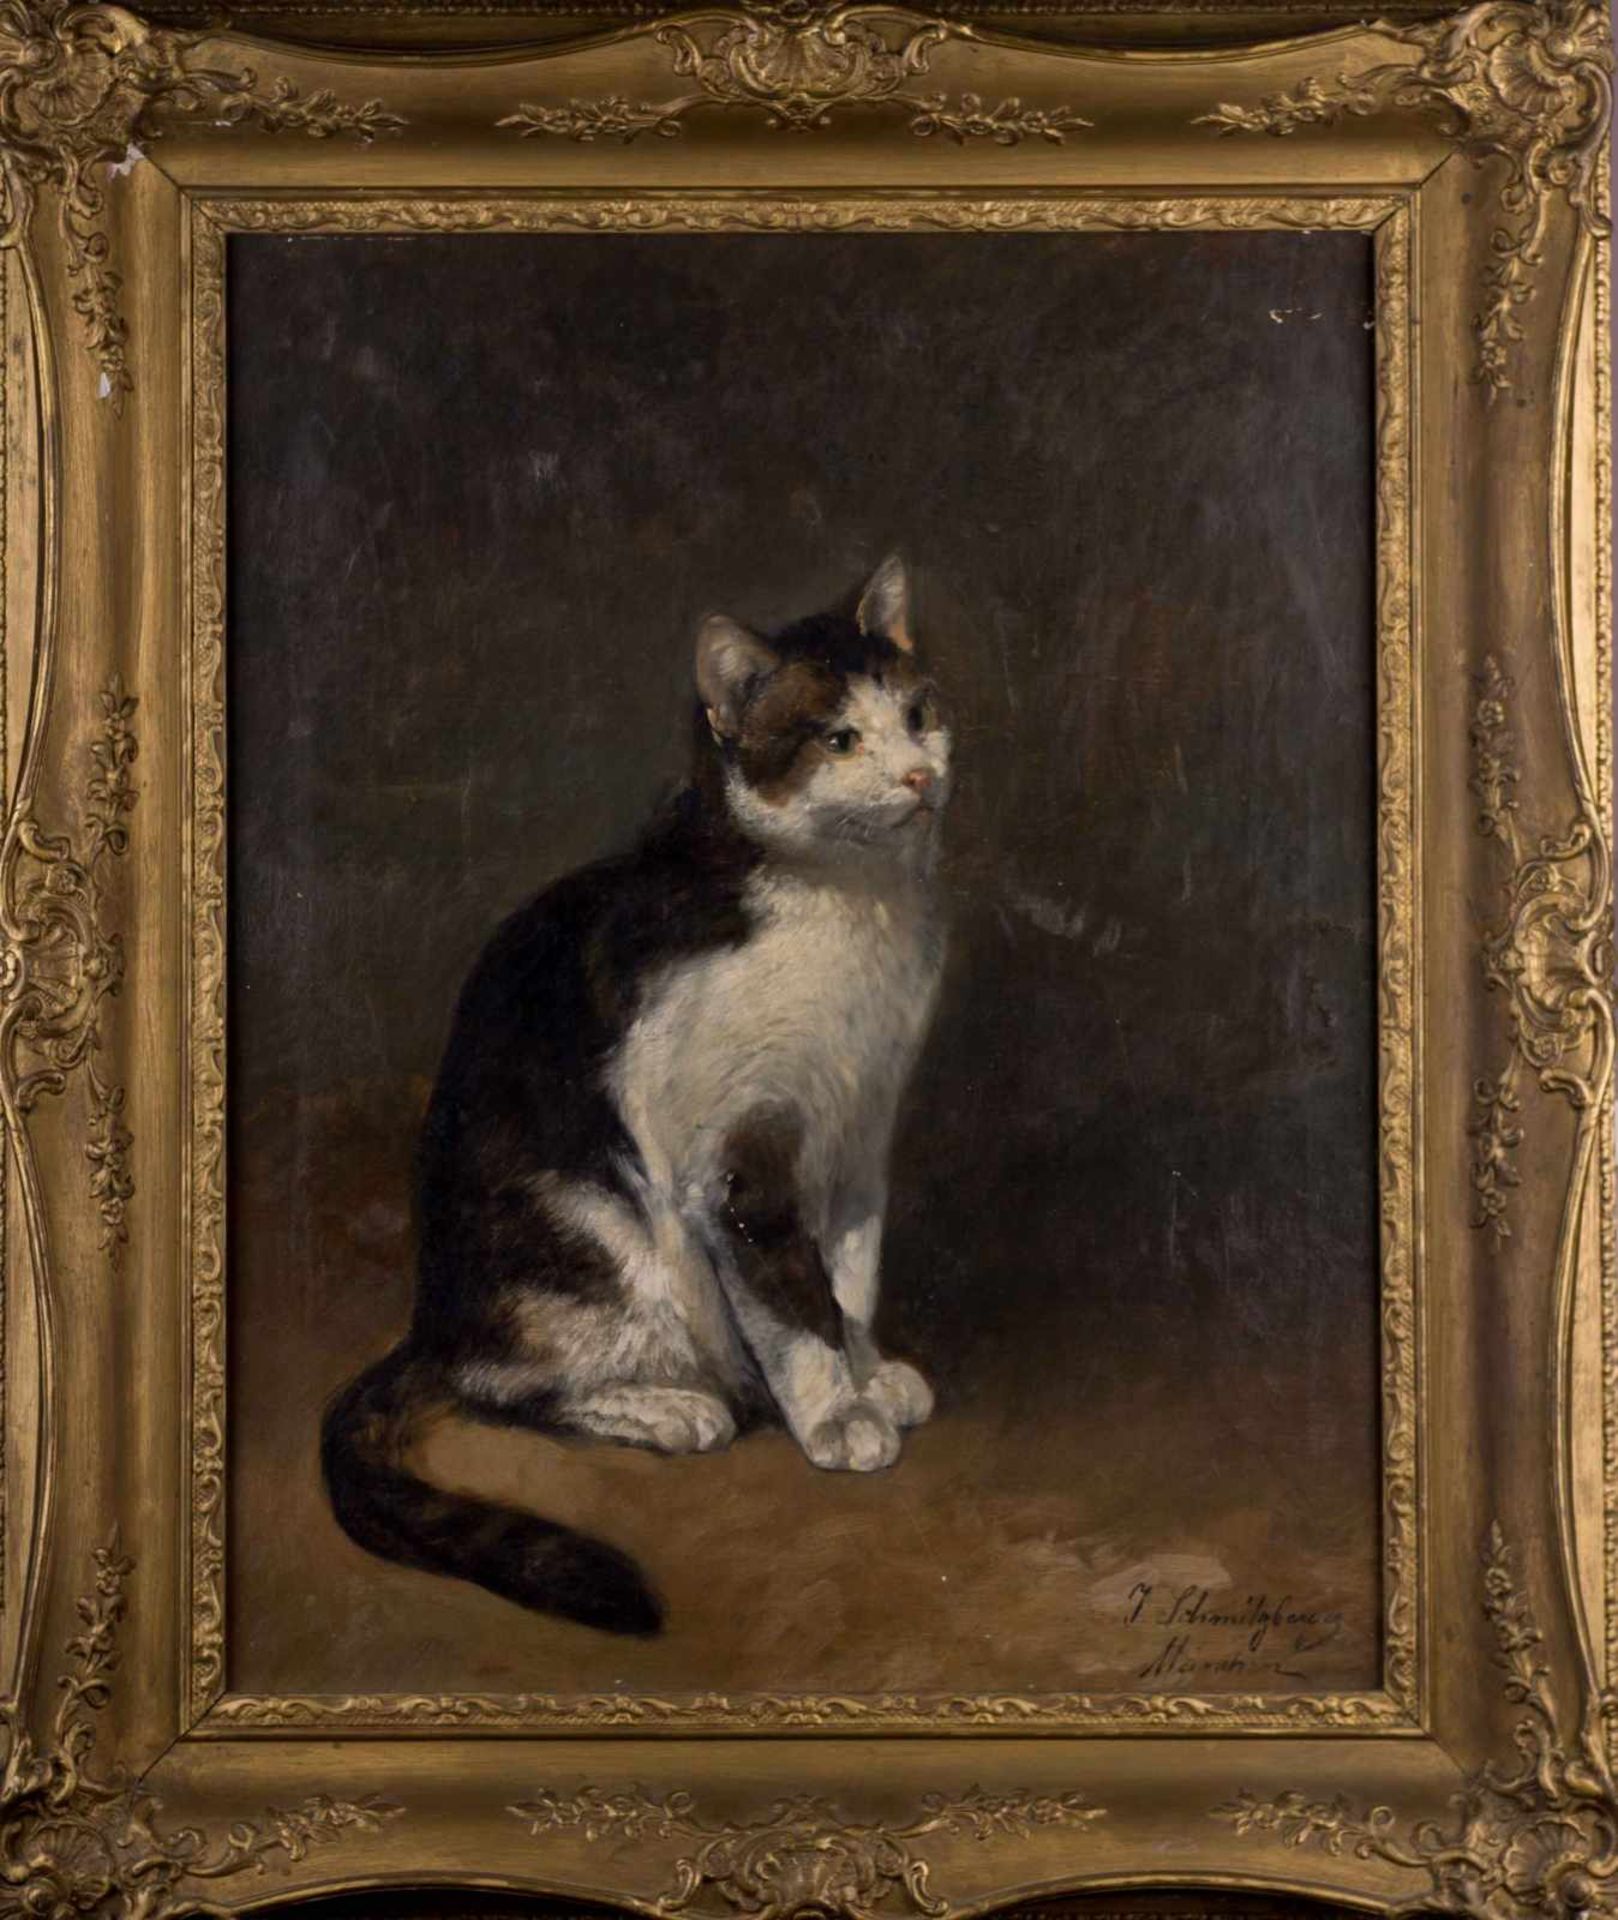 Josef SCHMITZBERGER (1851-c.1936) "Katzenportrait" Gemälde Öl/Leinwand, 65 cm x 53 cm, rechts - Bild 2 aus 5